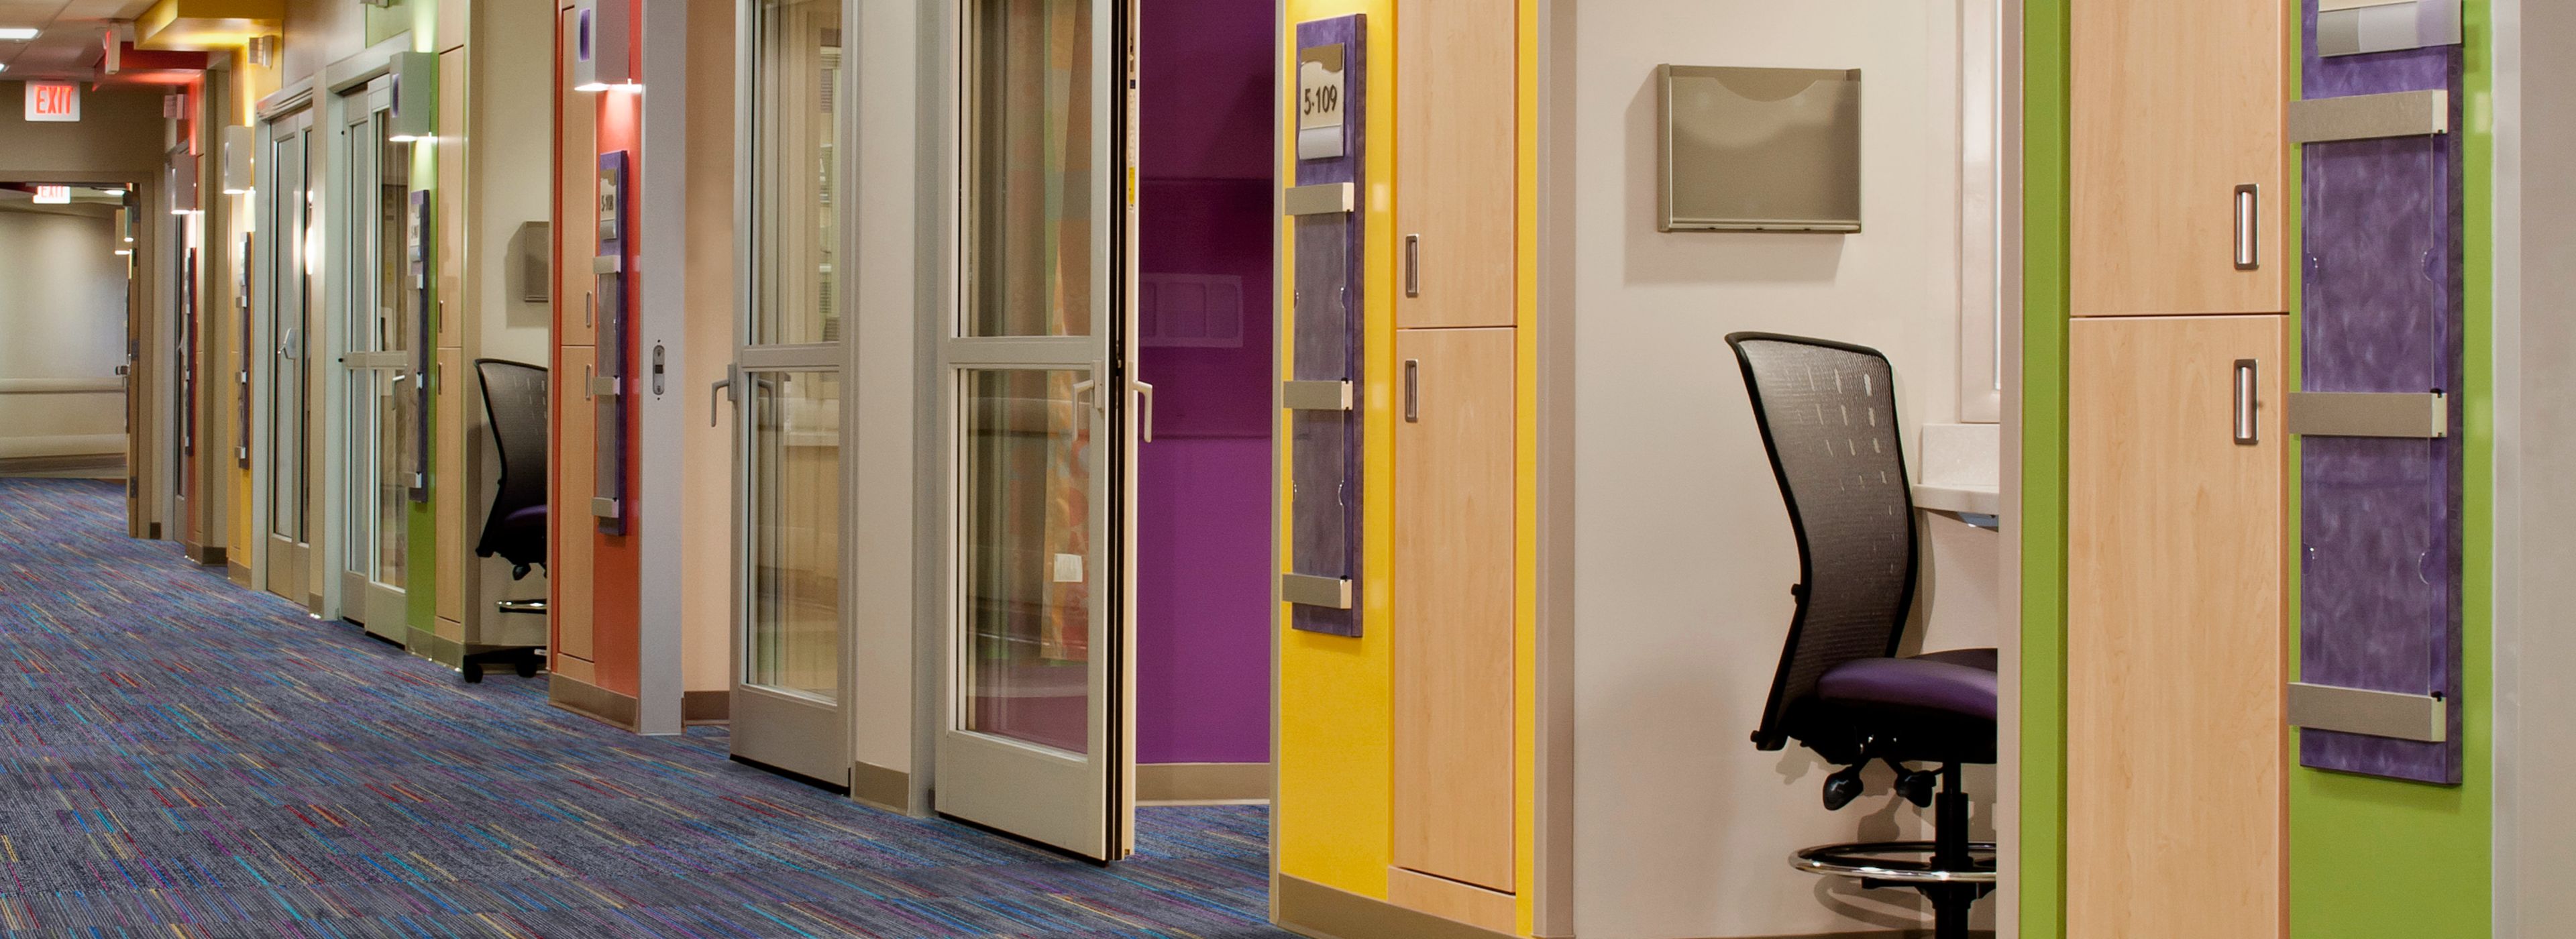 Interface Roy G Biv carpet tile in healthcare corridor with multiple rooms imagen número 1